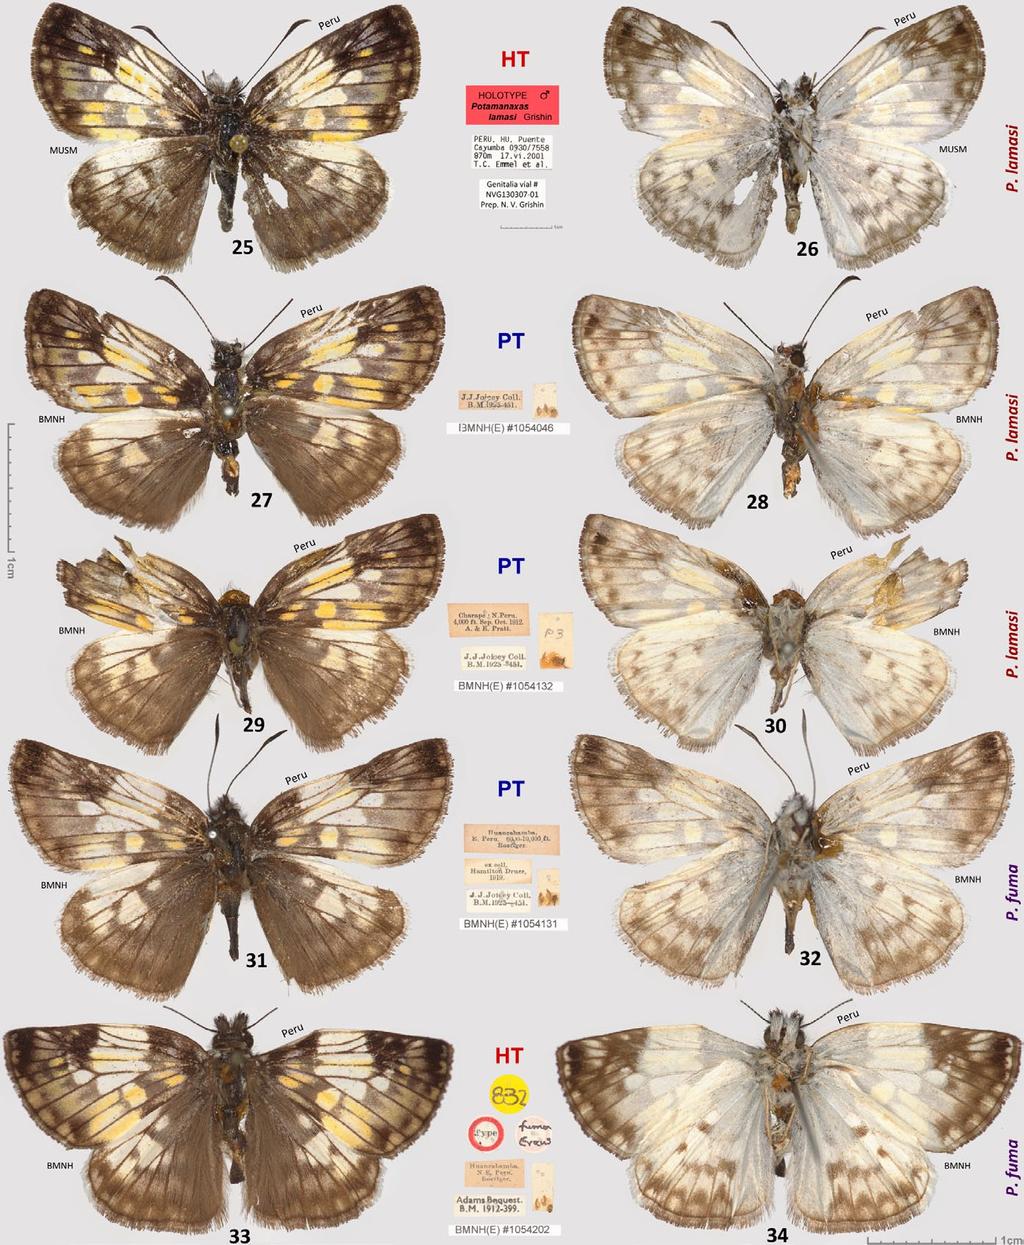 TROP. LEPID. RES., 23(1): 1-13, 2013 7 Figs. 25-34. Potamanaxas lamasi n. sp. and P. fuma type specimens. 25-26. - P. lamasi n. sp. holotype, Peru, (genitalia shown in Fig. 58), 27-28. - P. lamasi n. sp. paratype, [Peru], J.